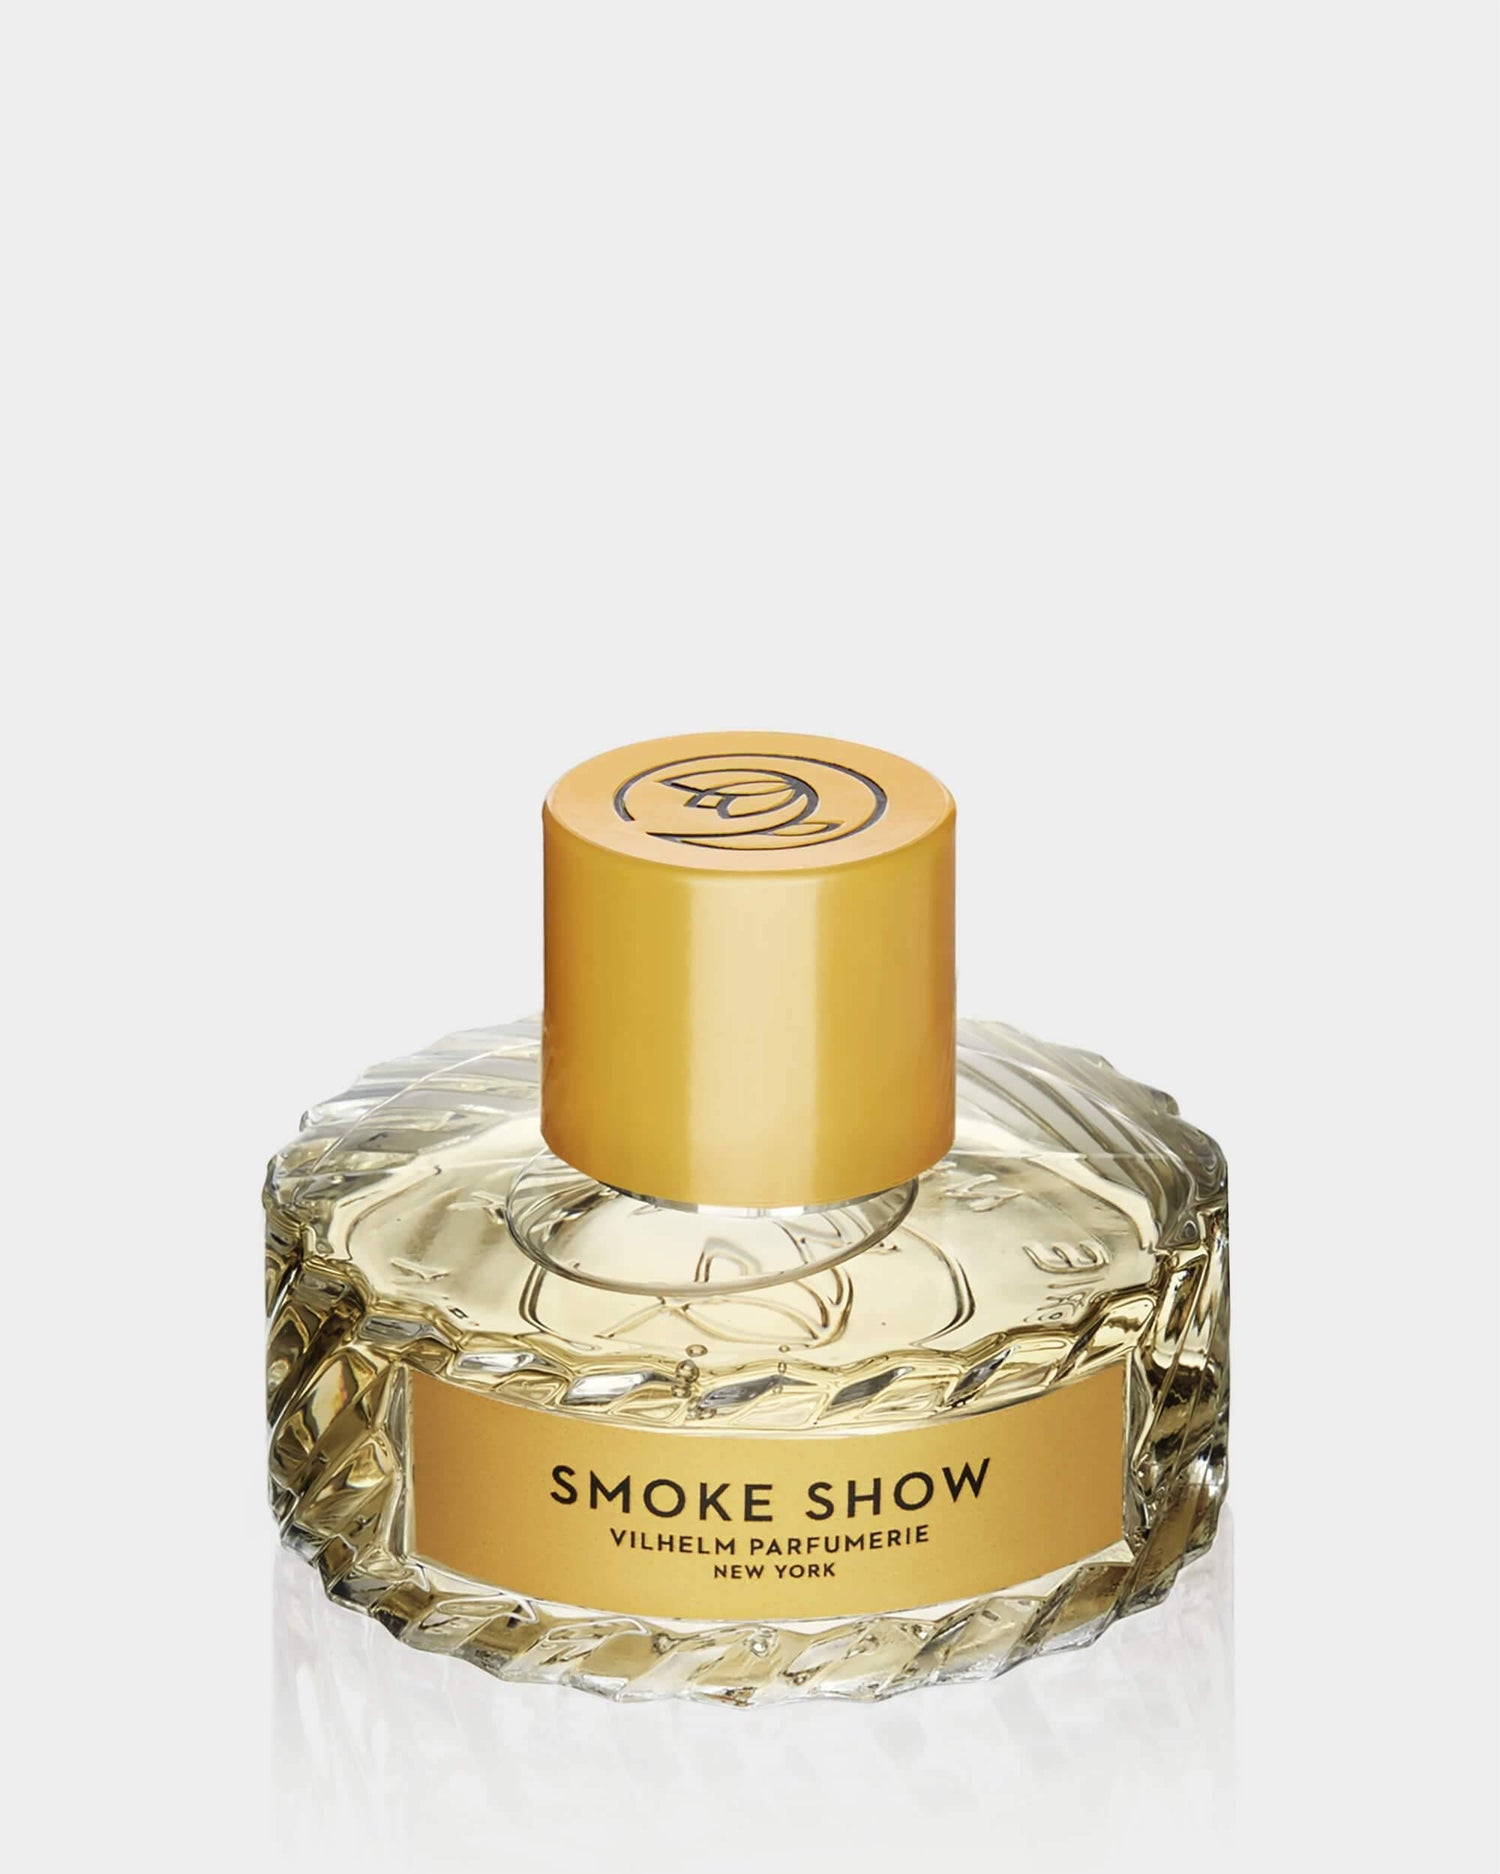 SMOKE SHOW - Vilhelm Parfumerie